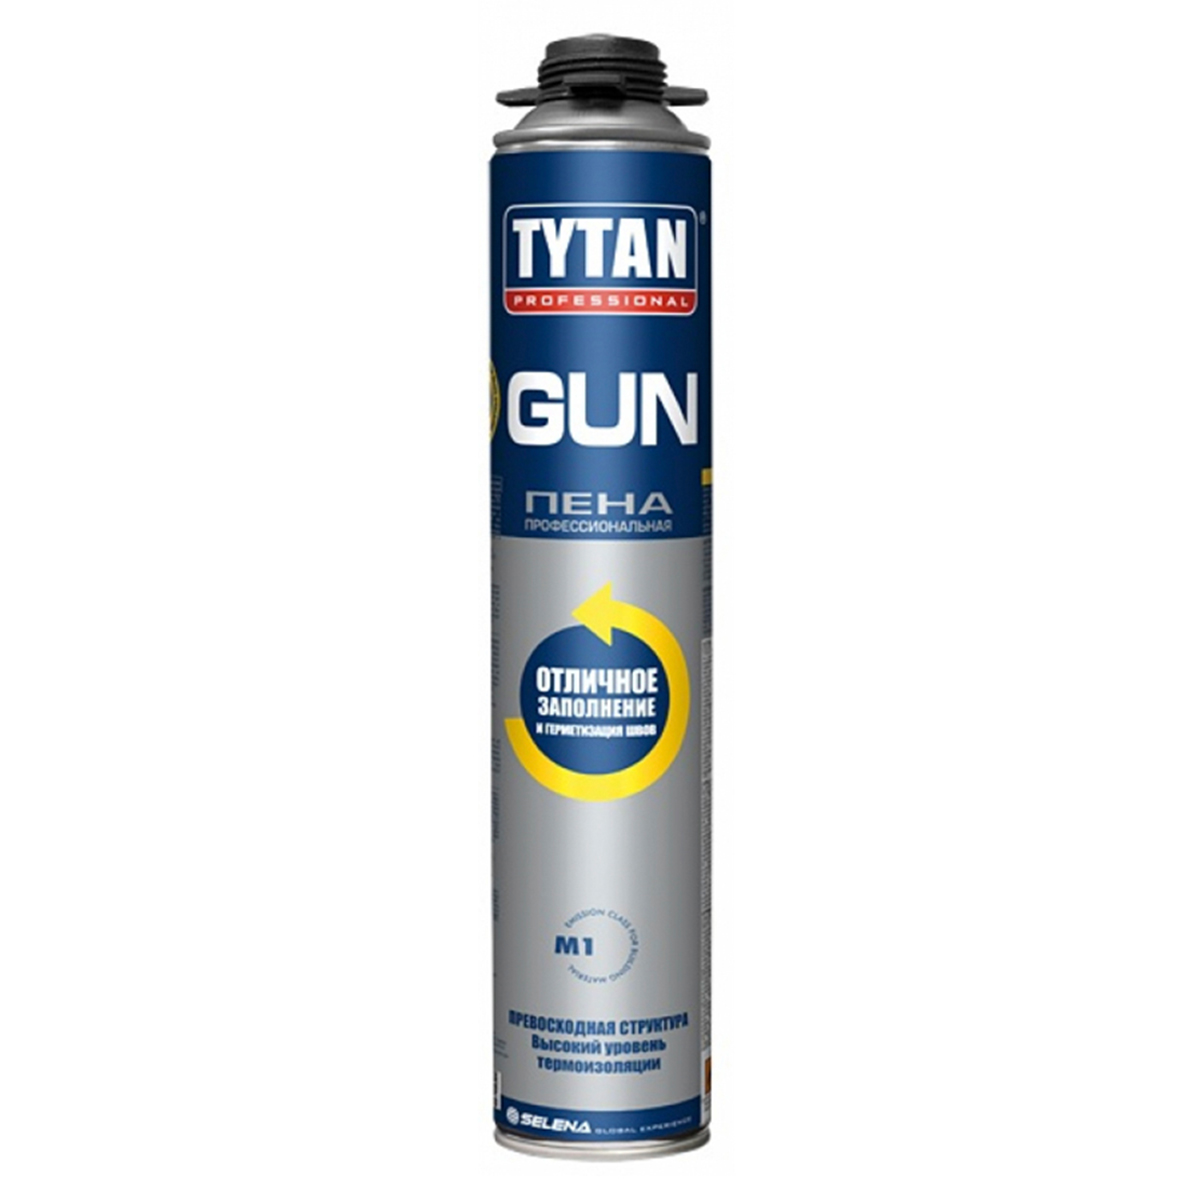 TYTAN Professional GUN   